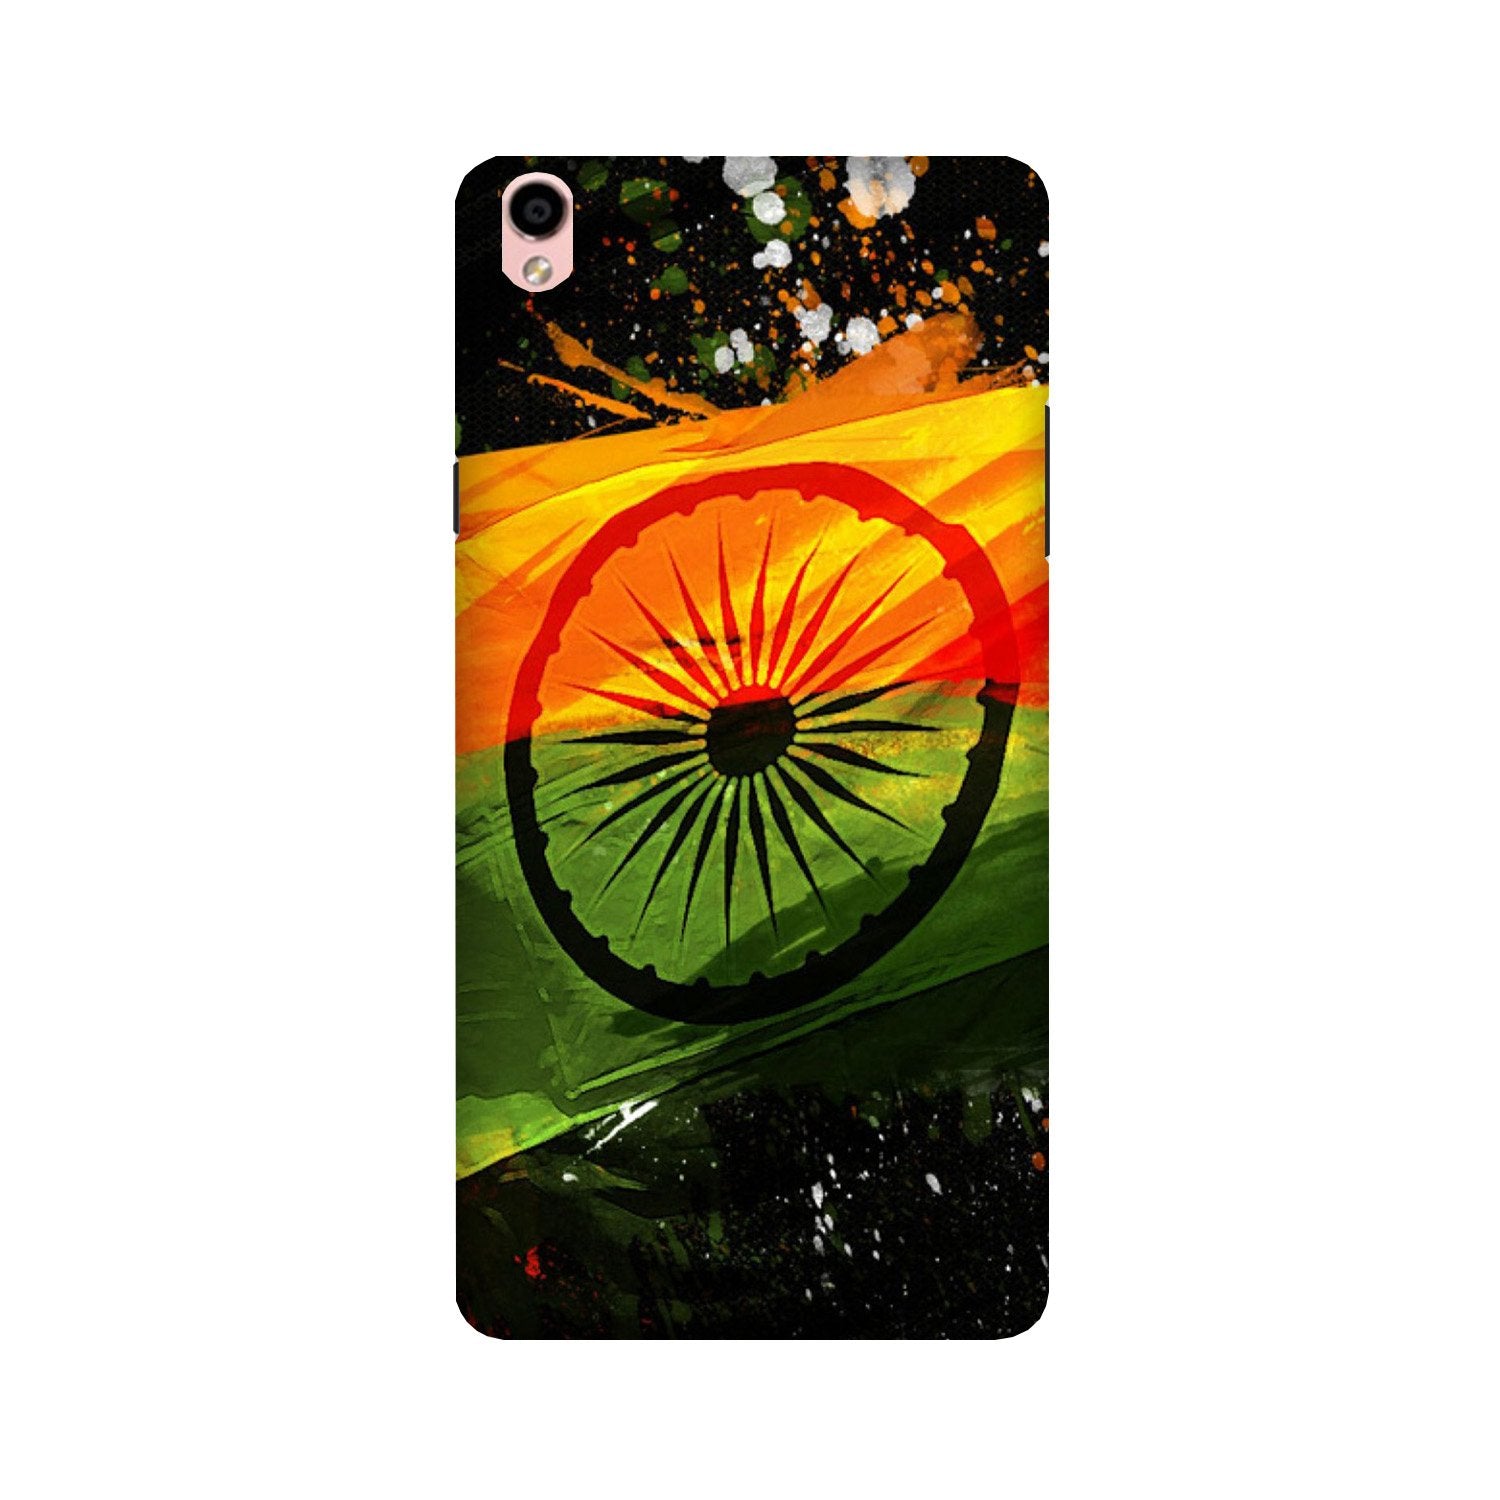 Indian Flag Case for Oppo F1 Plus(Design - 137)